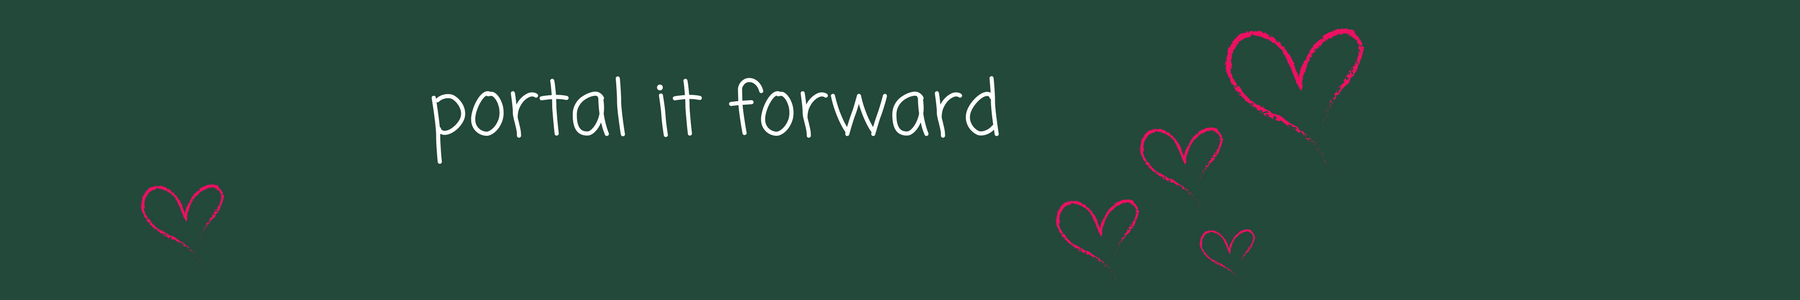 portal it forward (7)